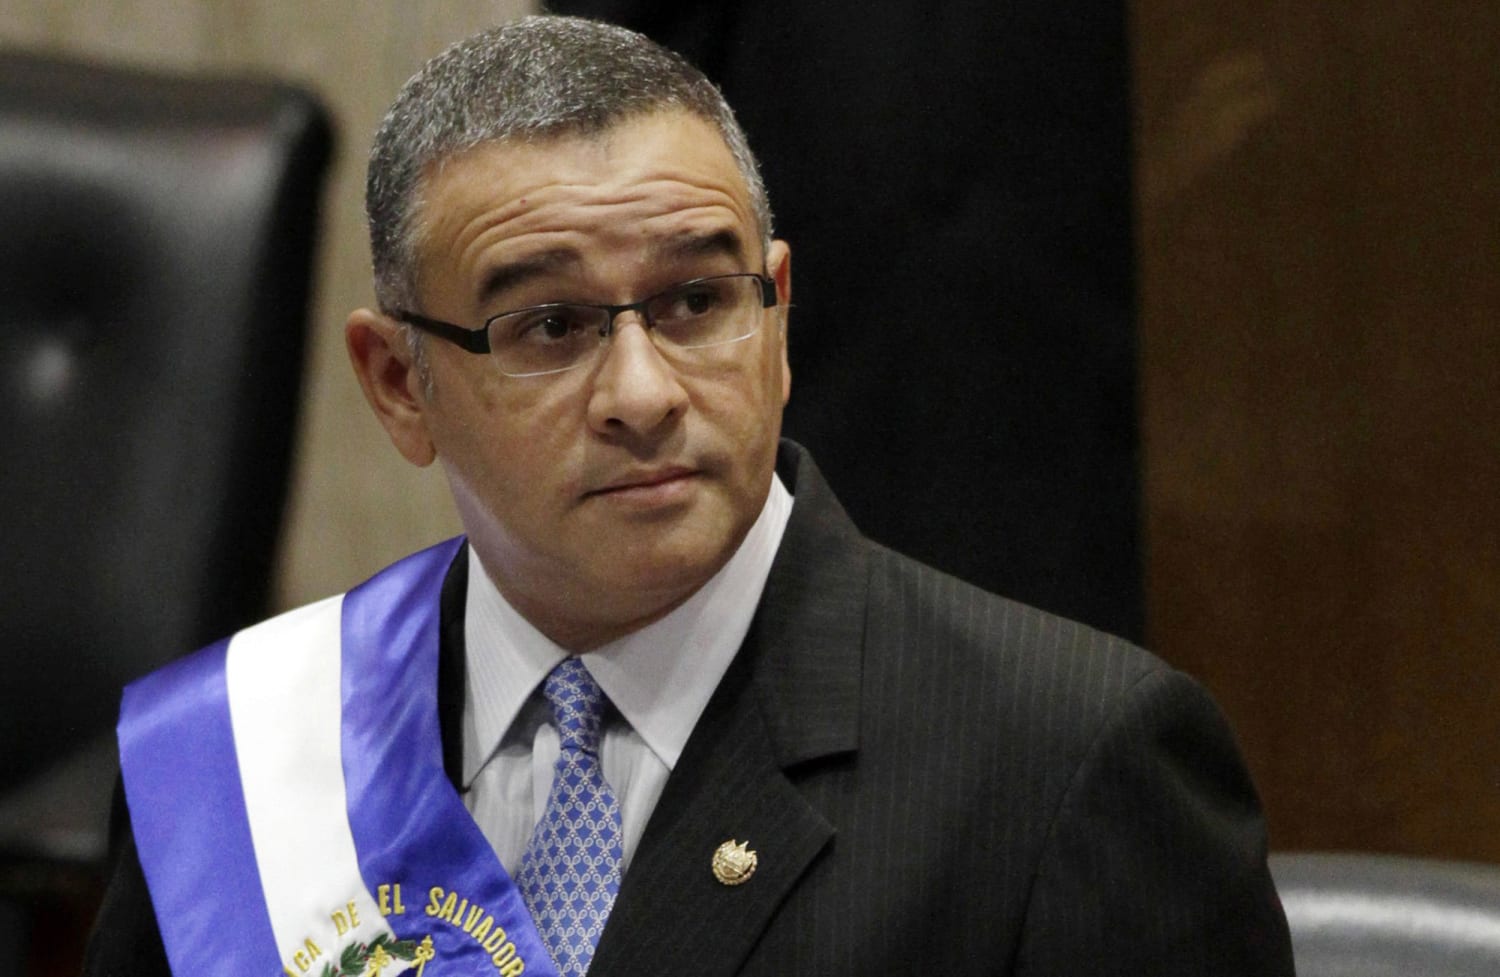 Former El Salvador president sentenced to 14 years in prison

-News